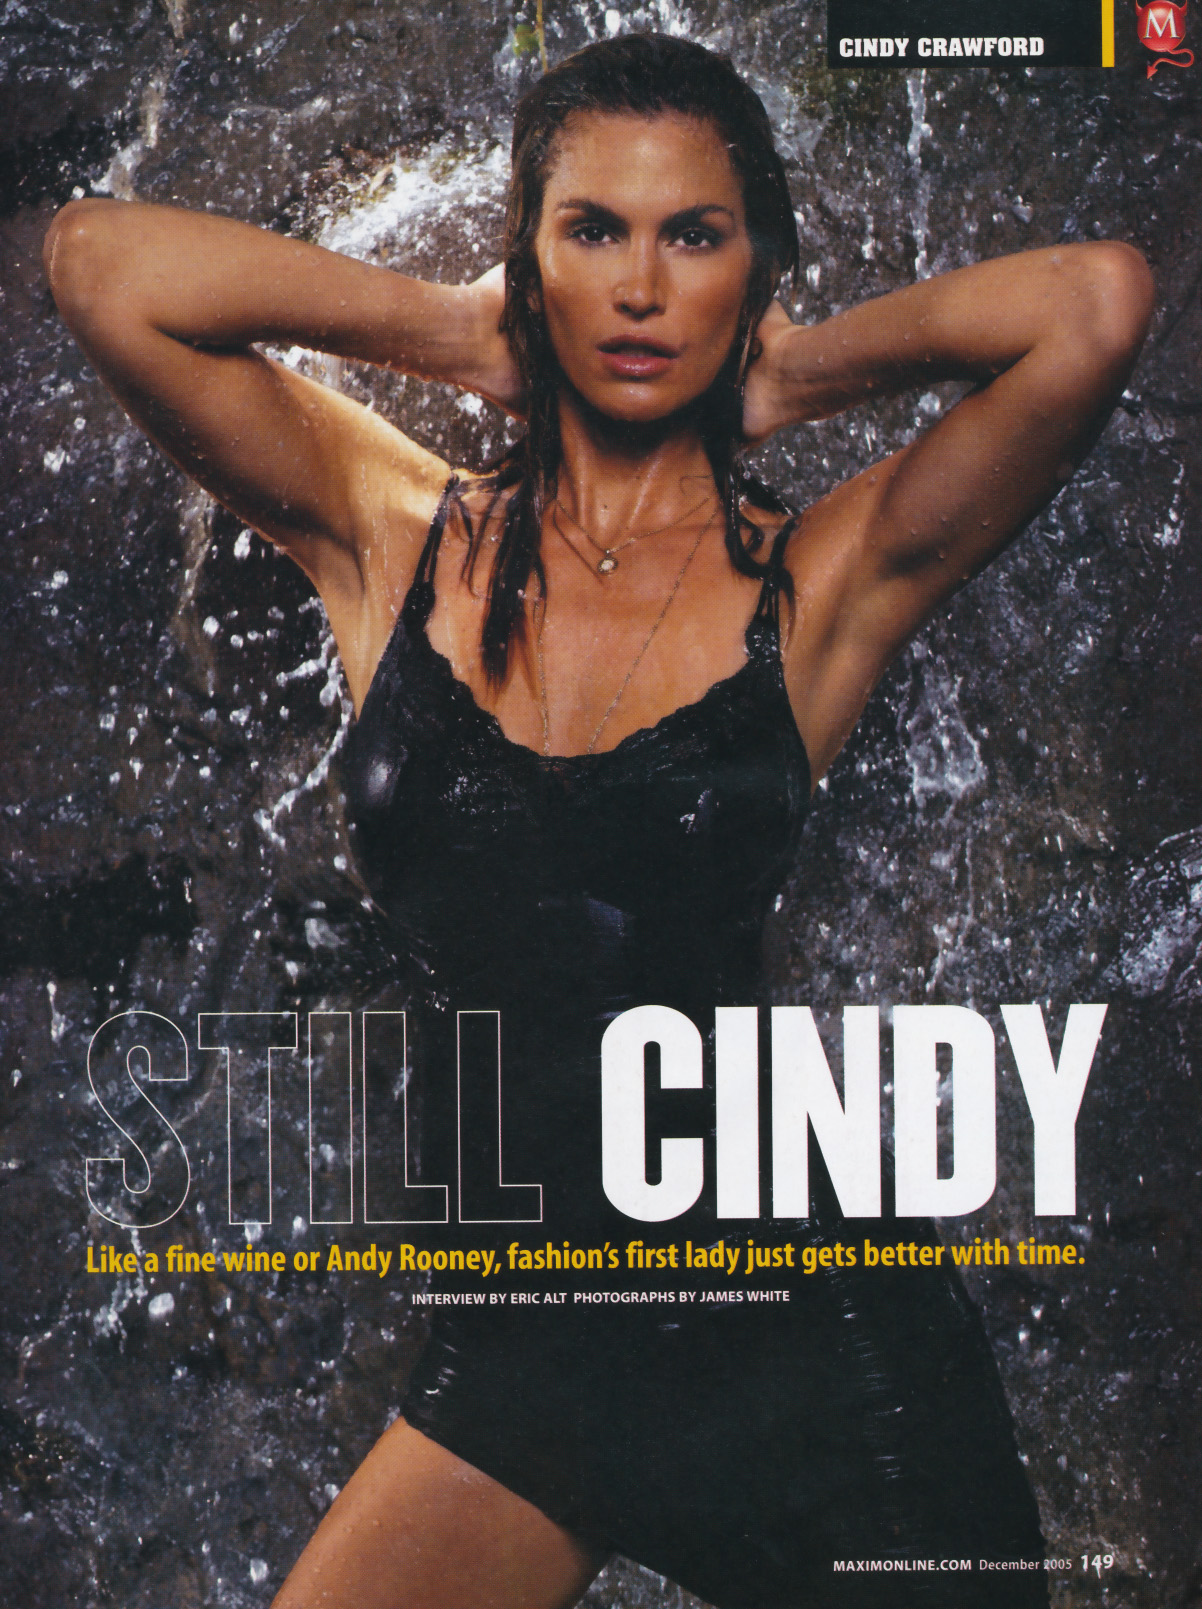 Still Cindy (Maxim USA December 2005) Credits: James White.